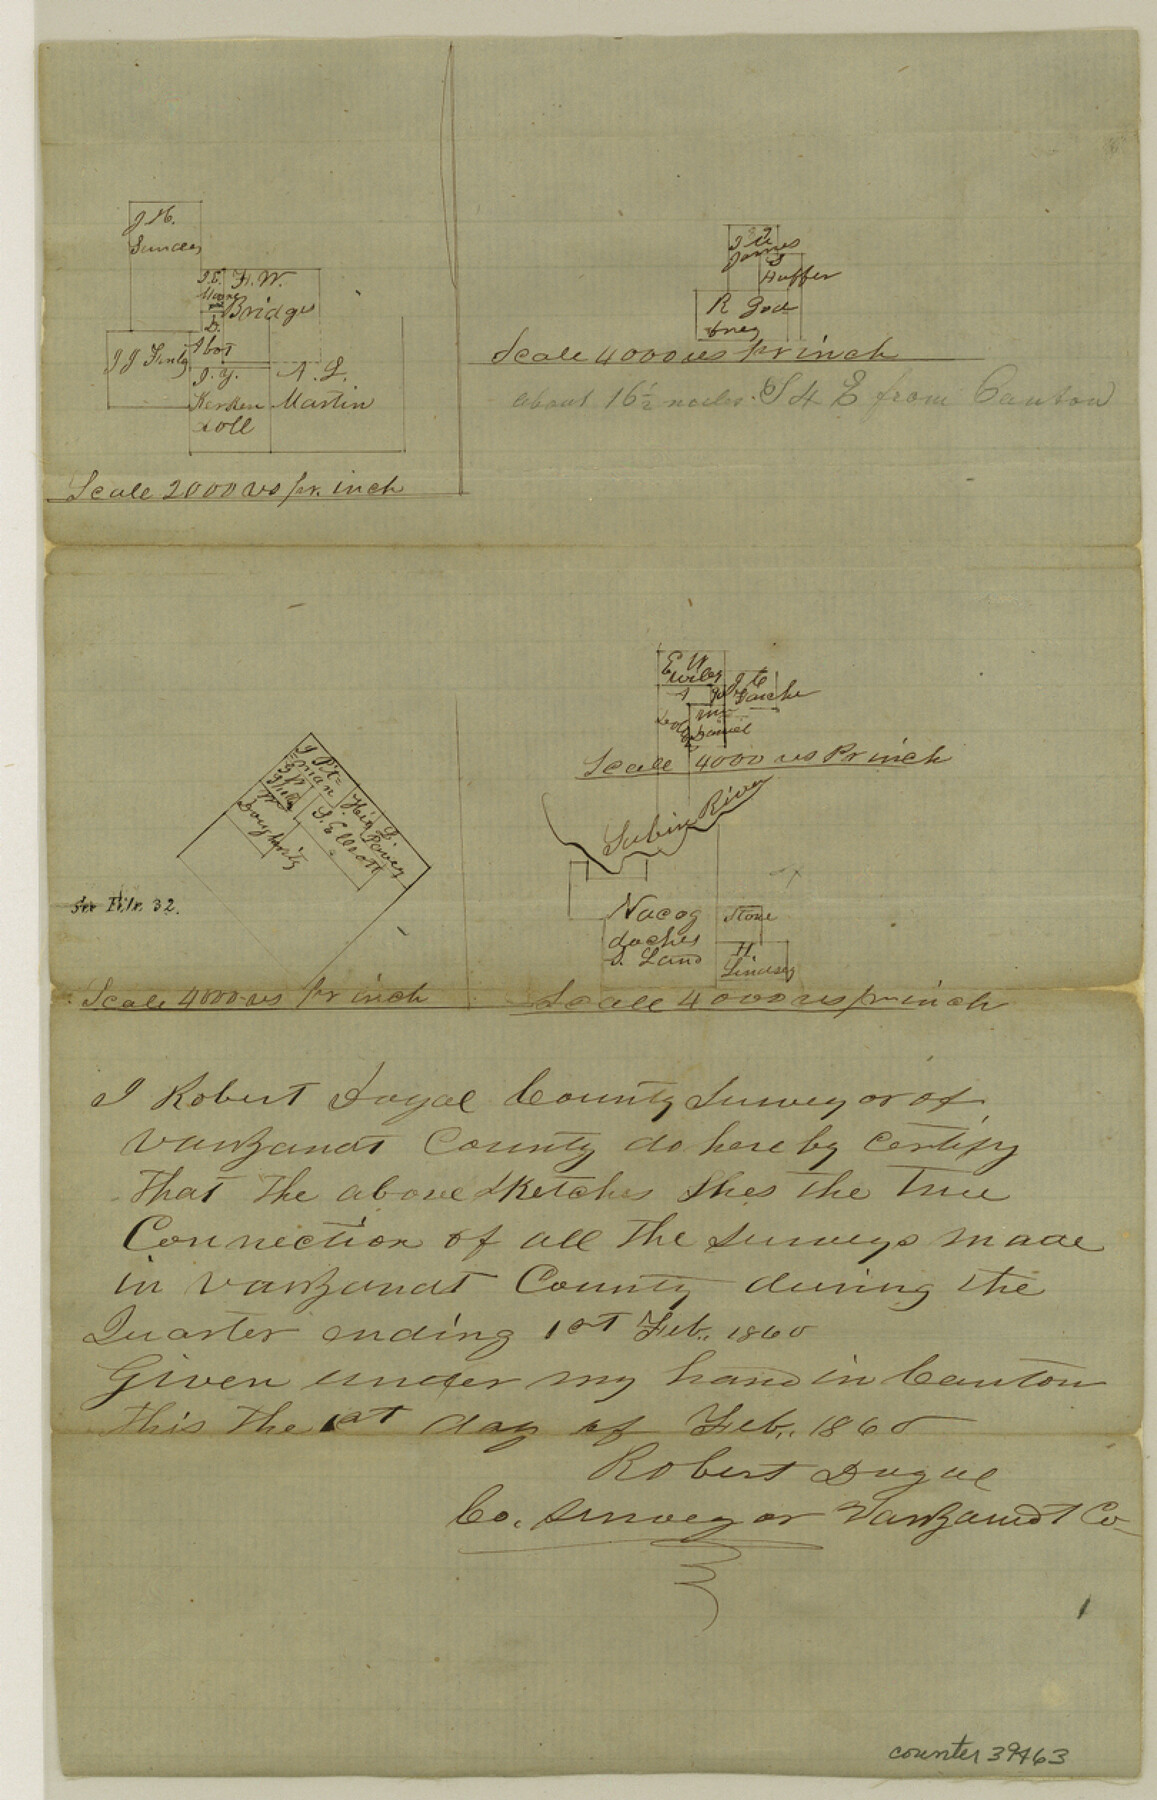 39463, Van Zandt County Sketch File 31, General Map Collection